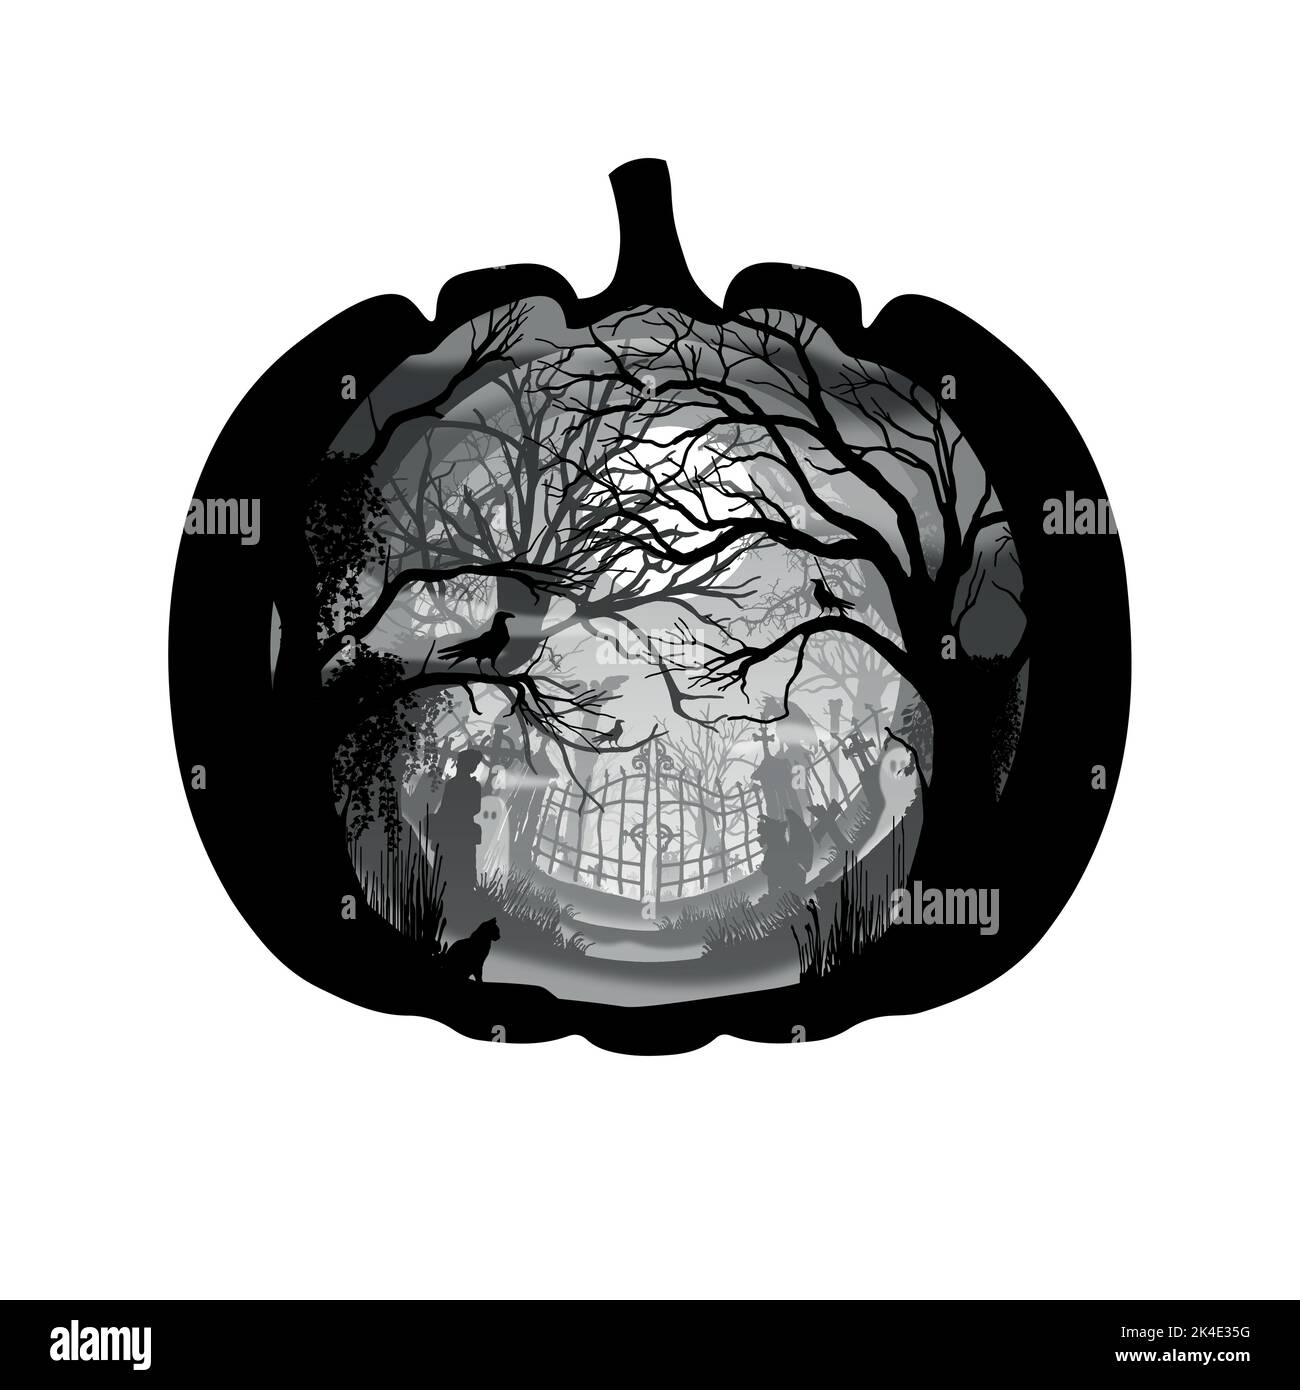 cemetery illustration in a pumpkin shape for Halloween celebration purpose Stock Vector